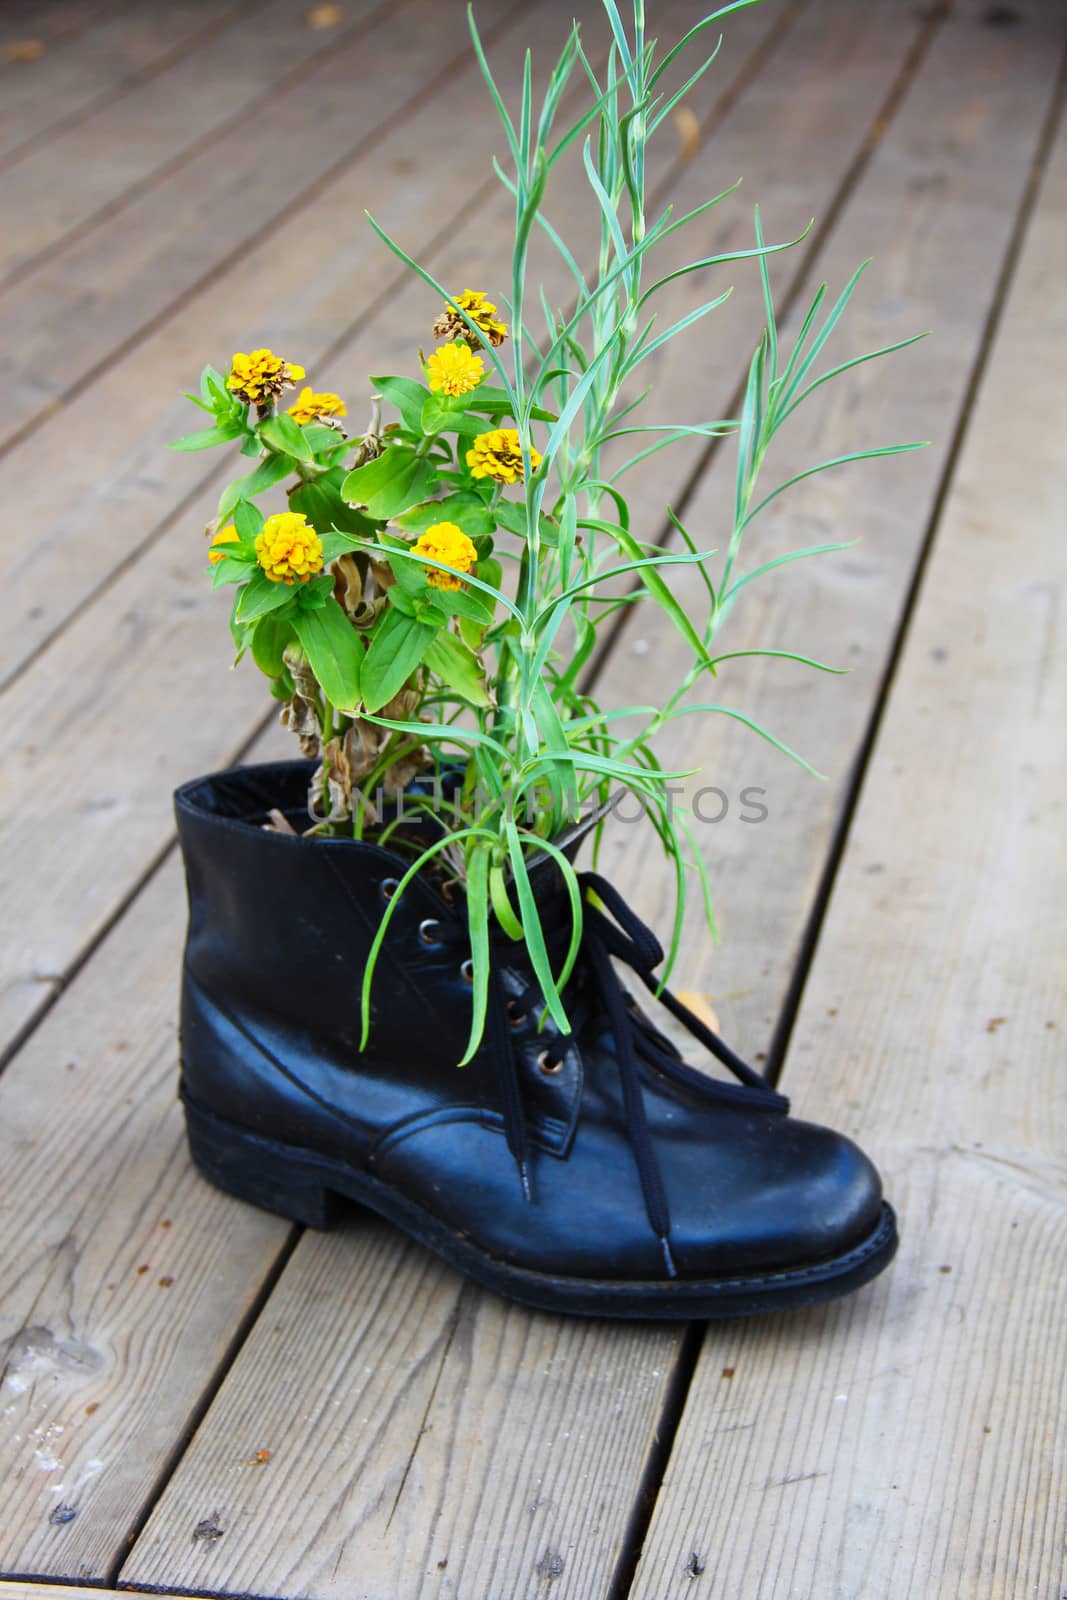 Flower in boot by destillat